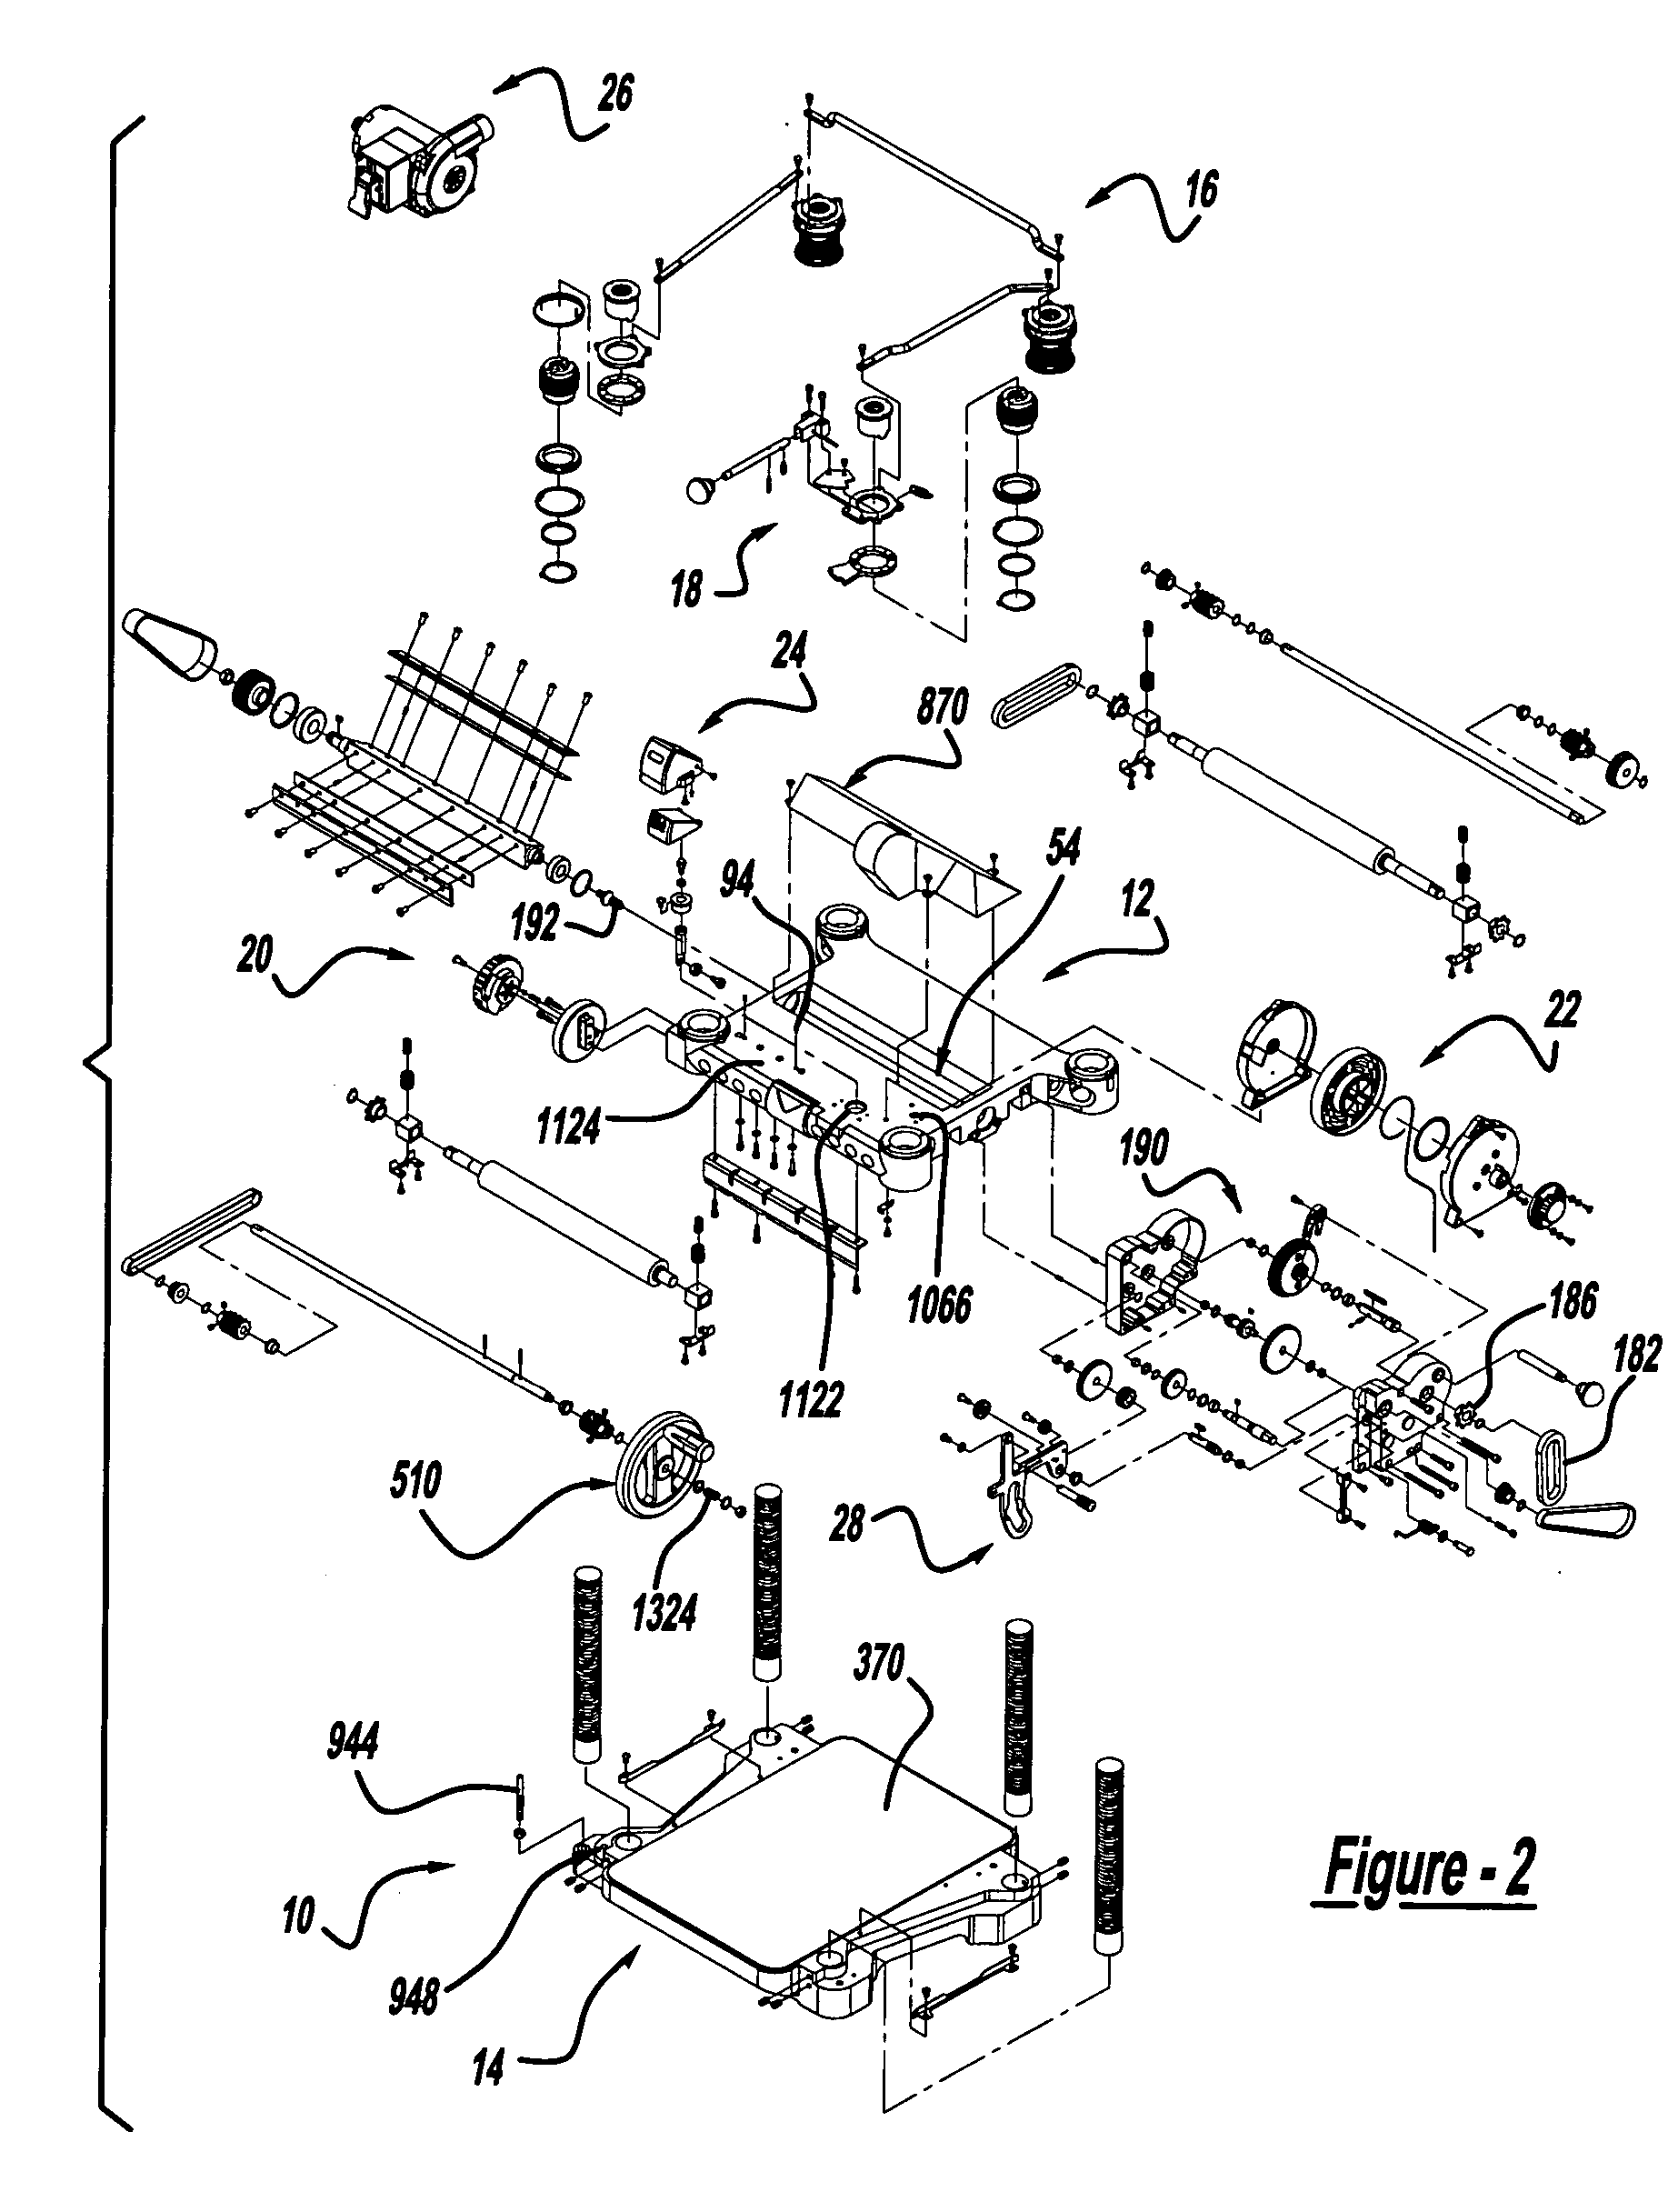 Multi-piece machine tool base